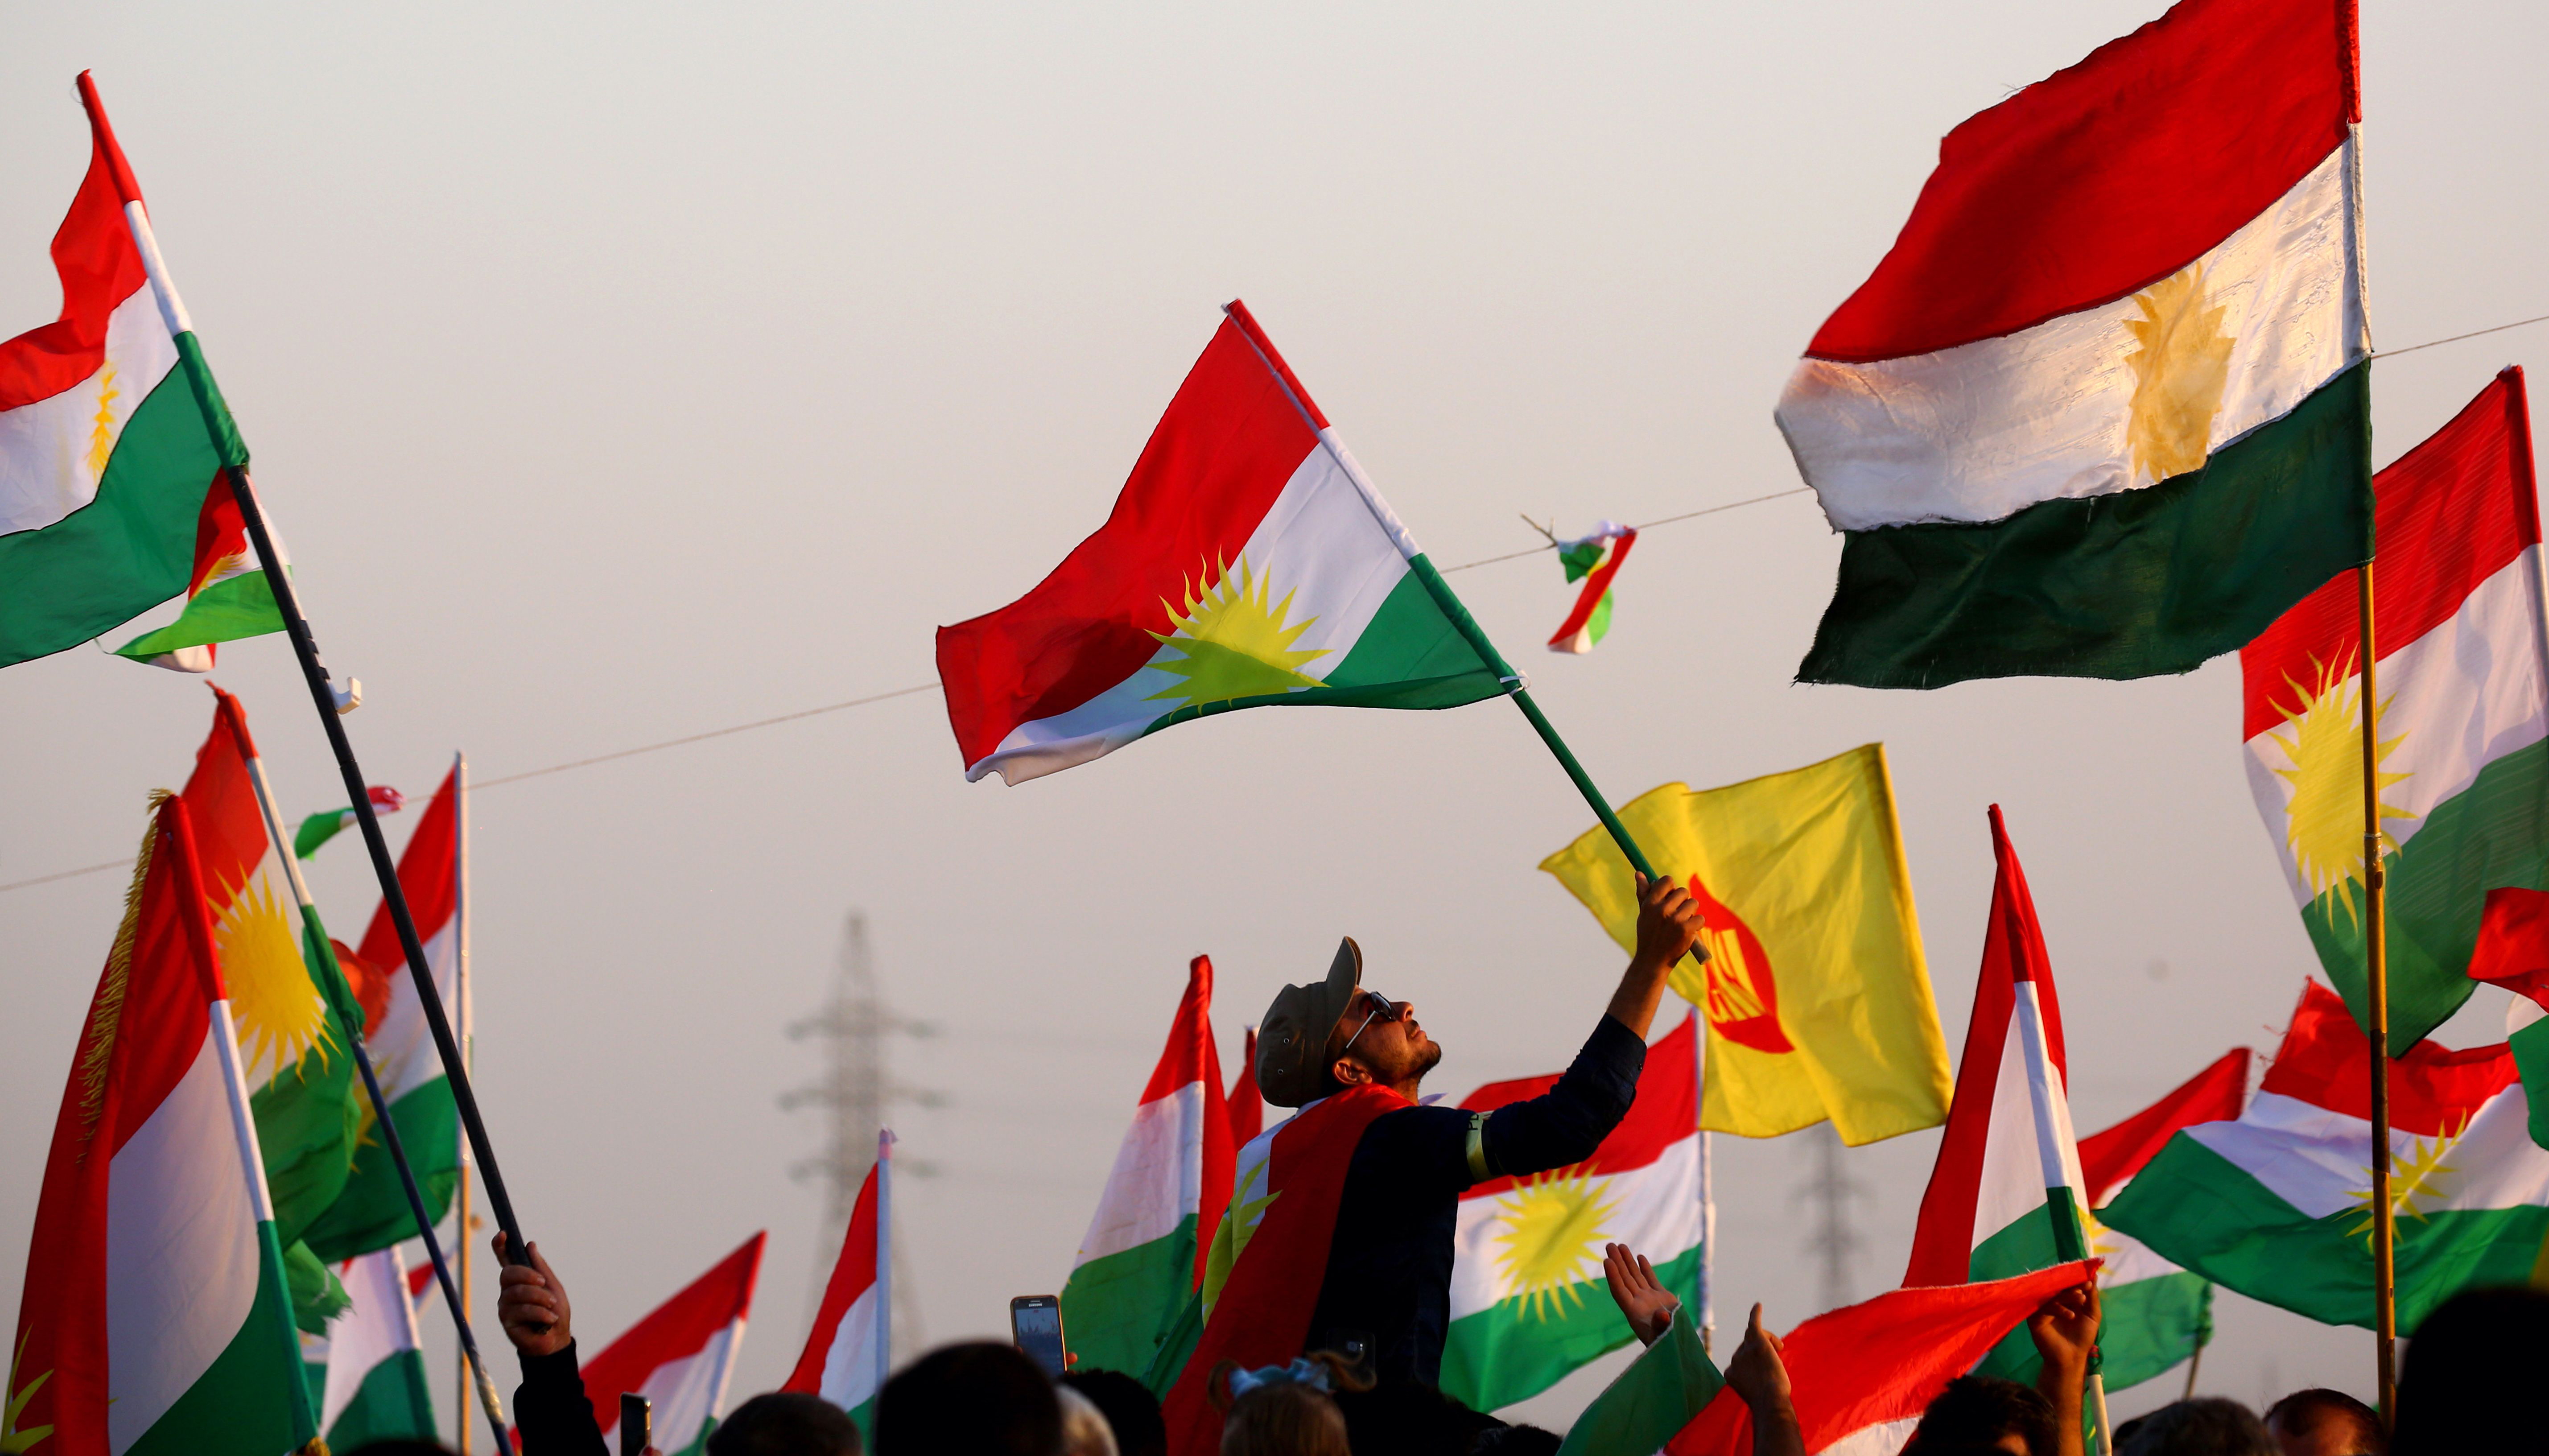 Timeline: The Kurds' Long Struggle With Statelessness